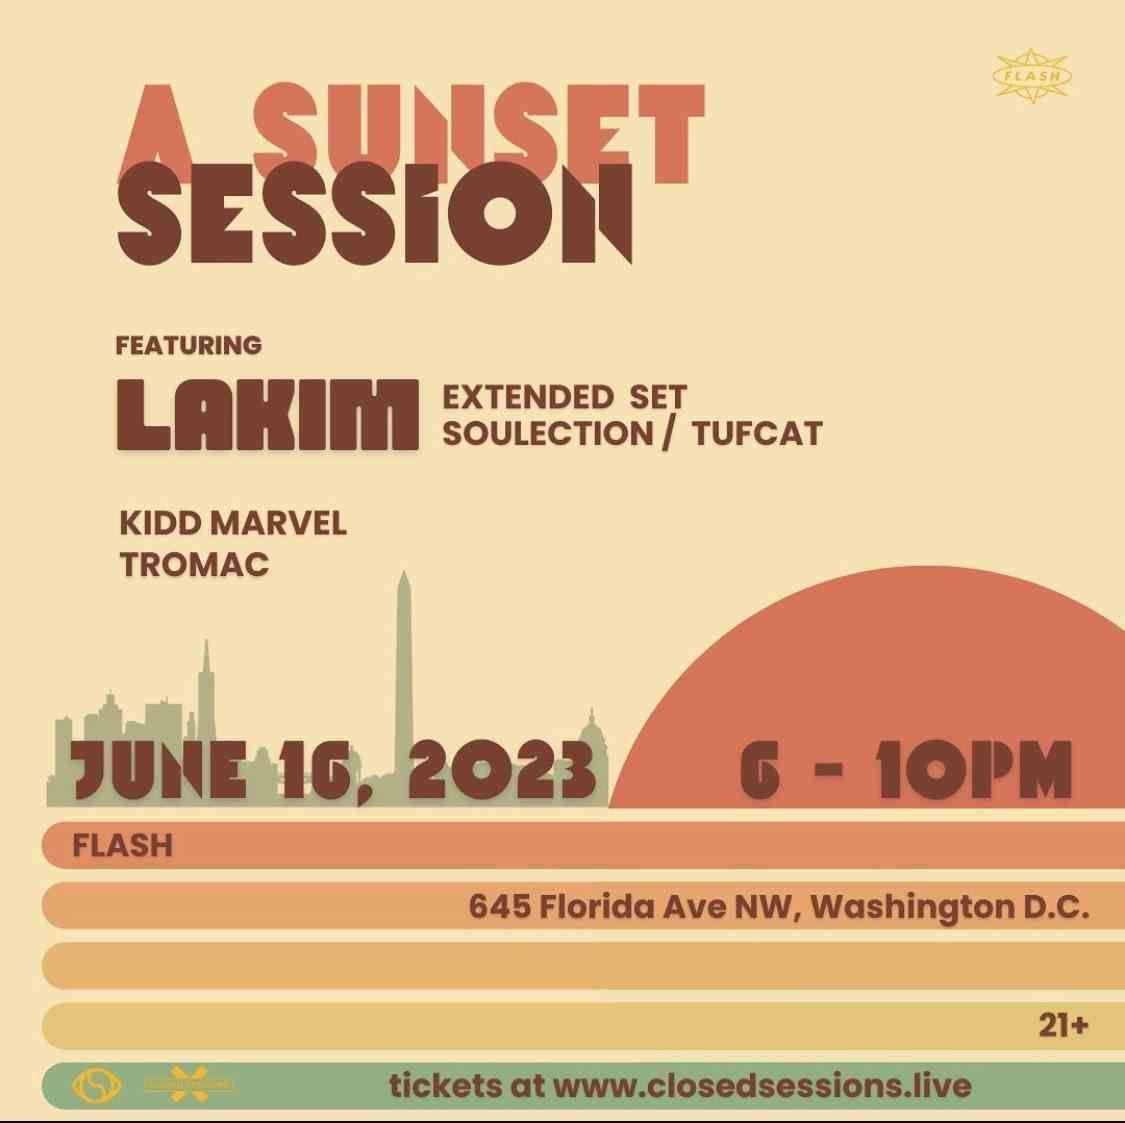 A Sunset Session: LAKIM - Kidd Marvel - Tromac event flyer